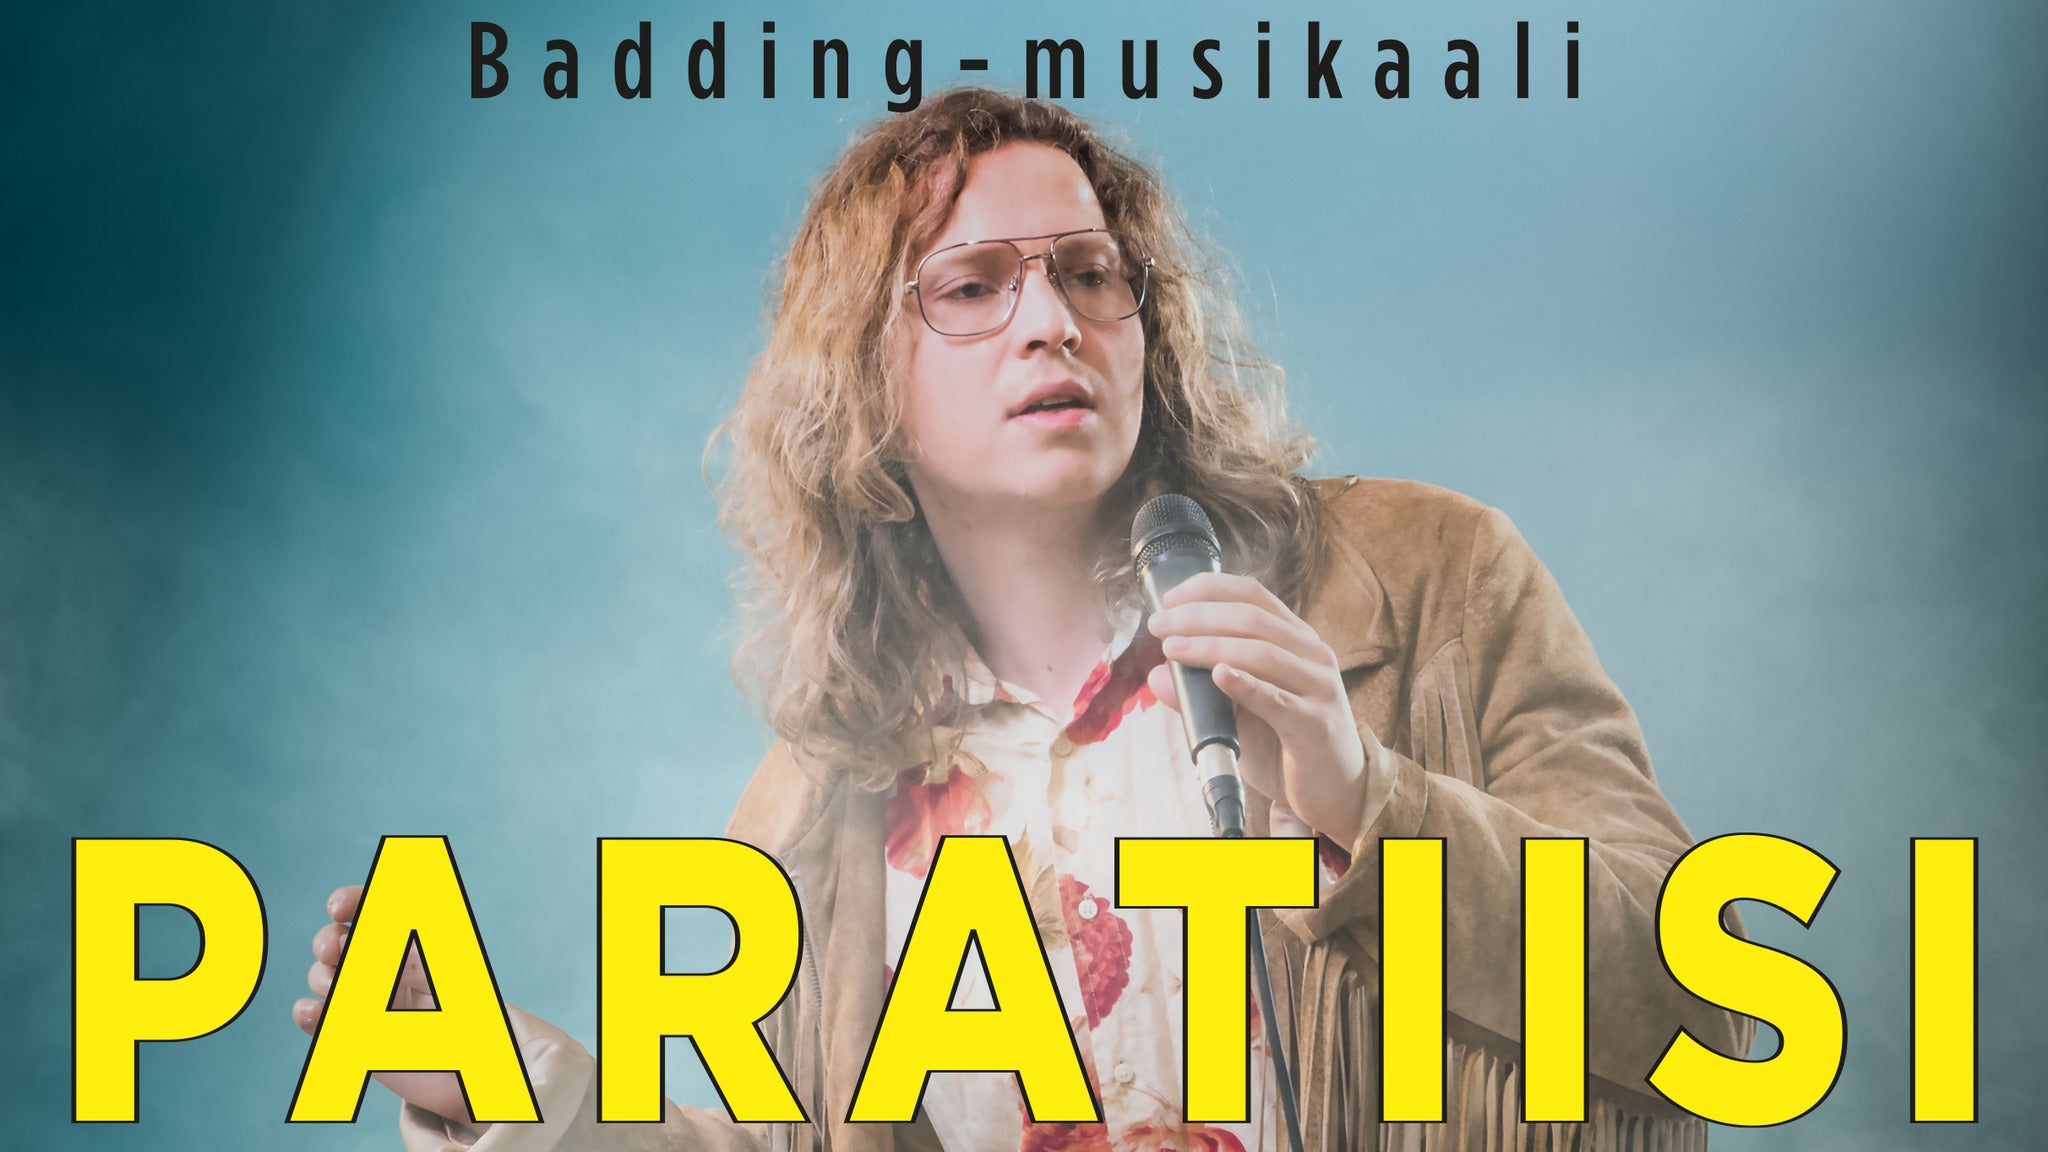 Badding -musikaali Paratiisi presale information on freepresalepasswords.com